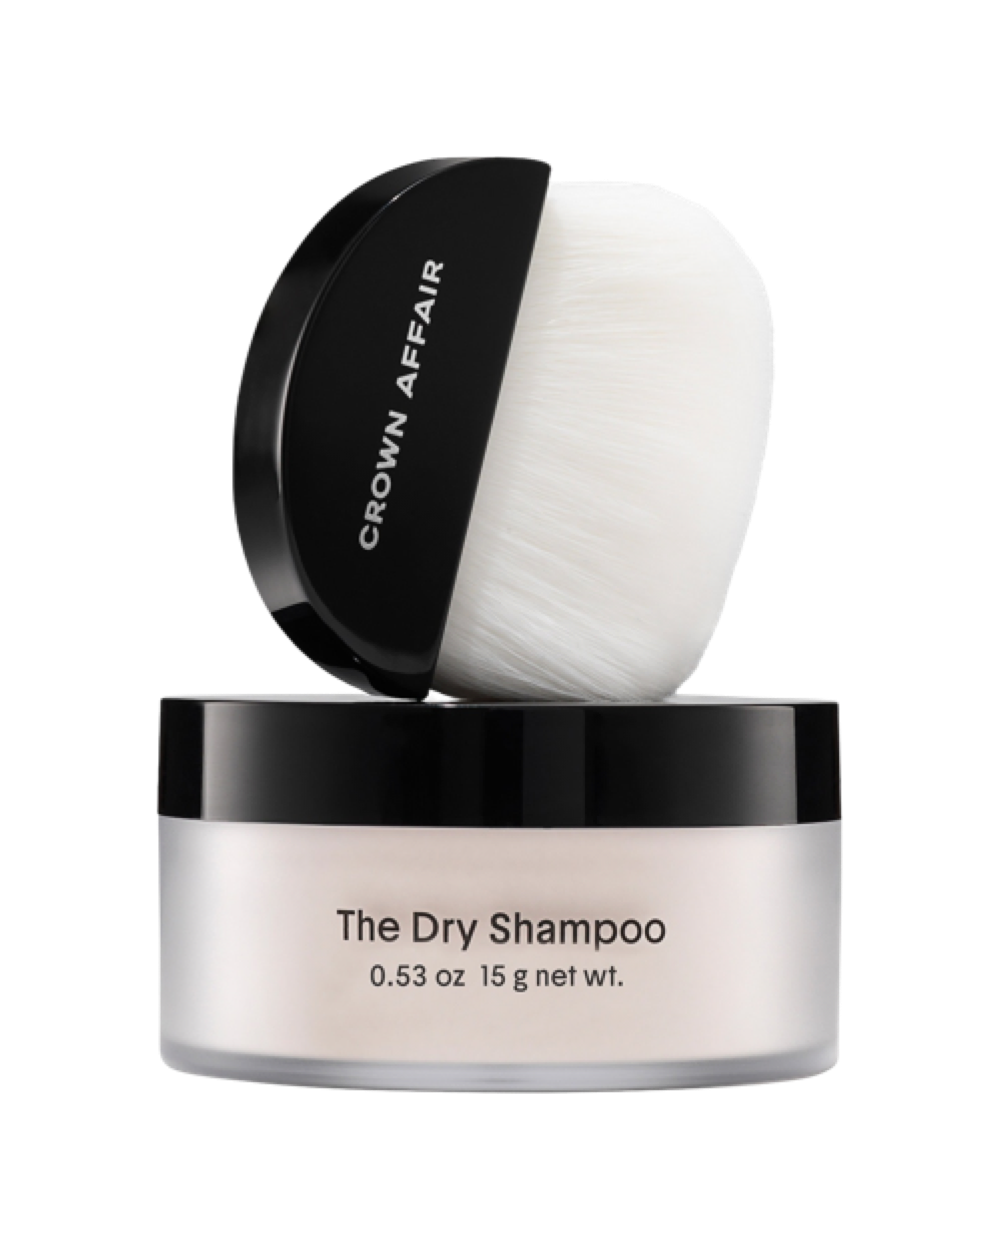 The Dry Shampoo